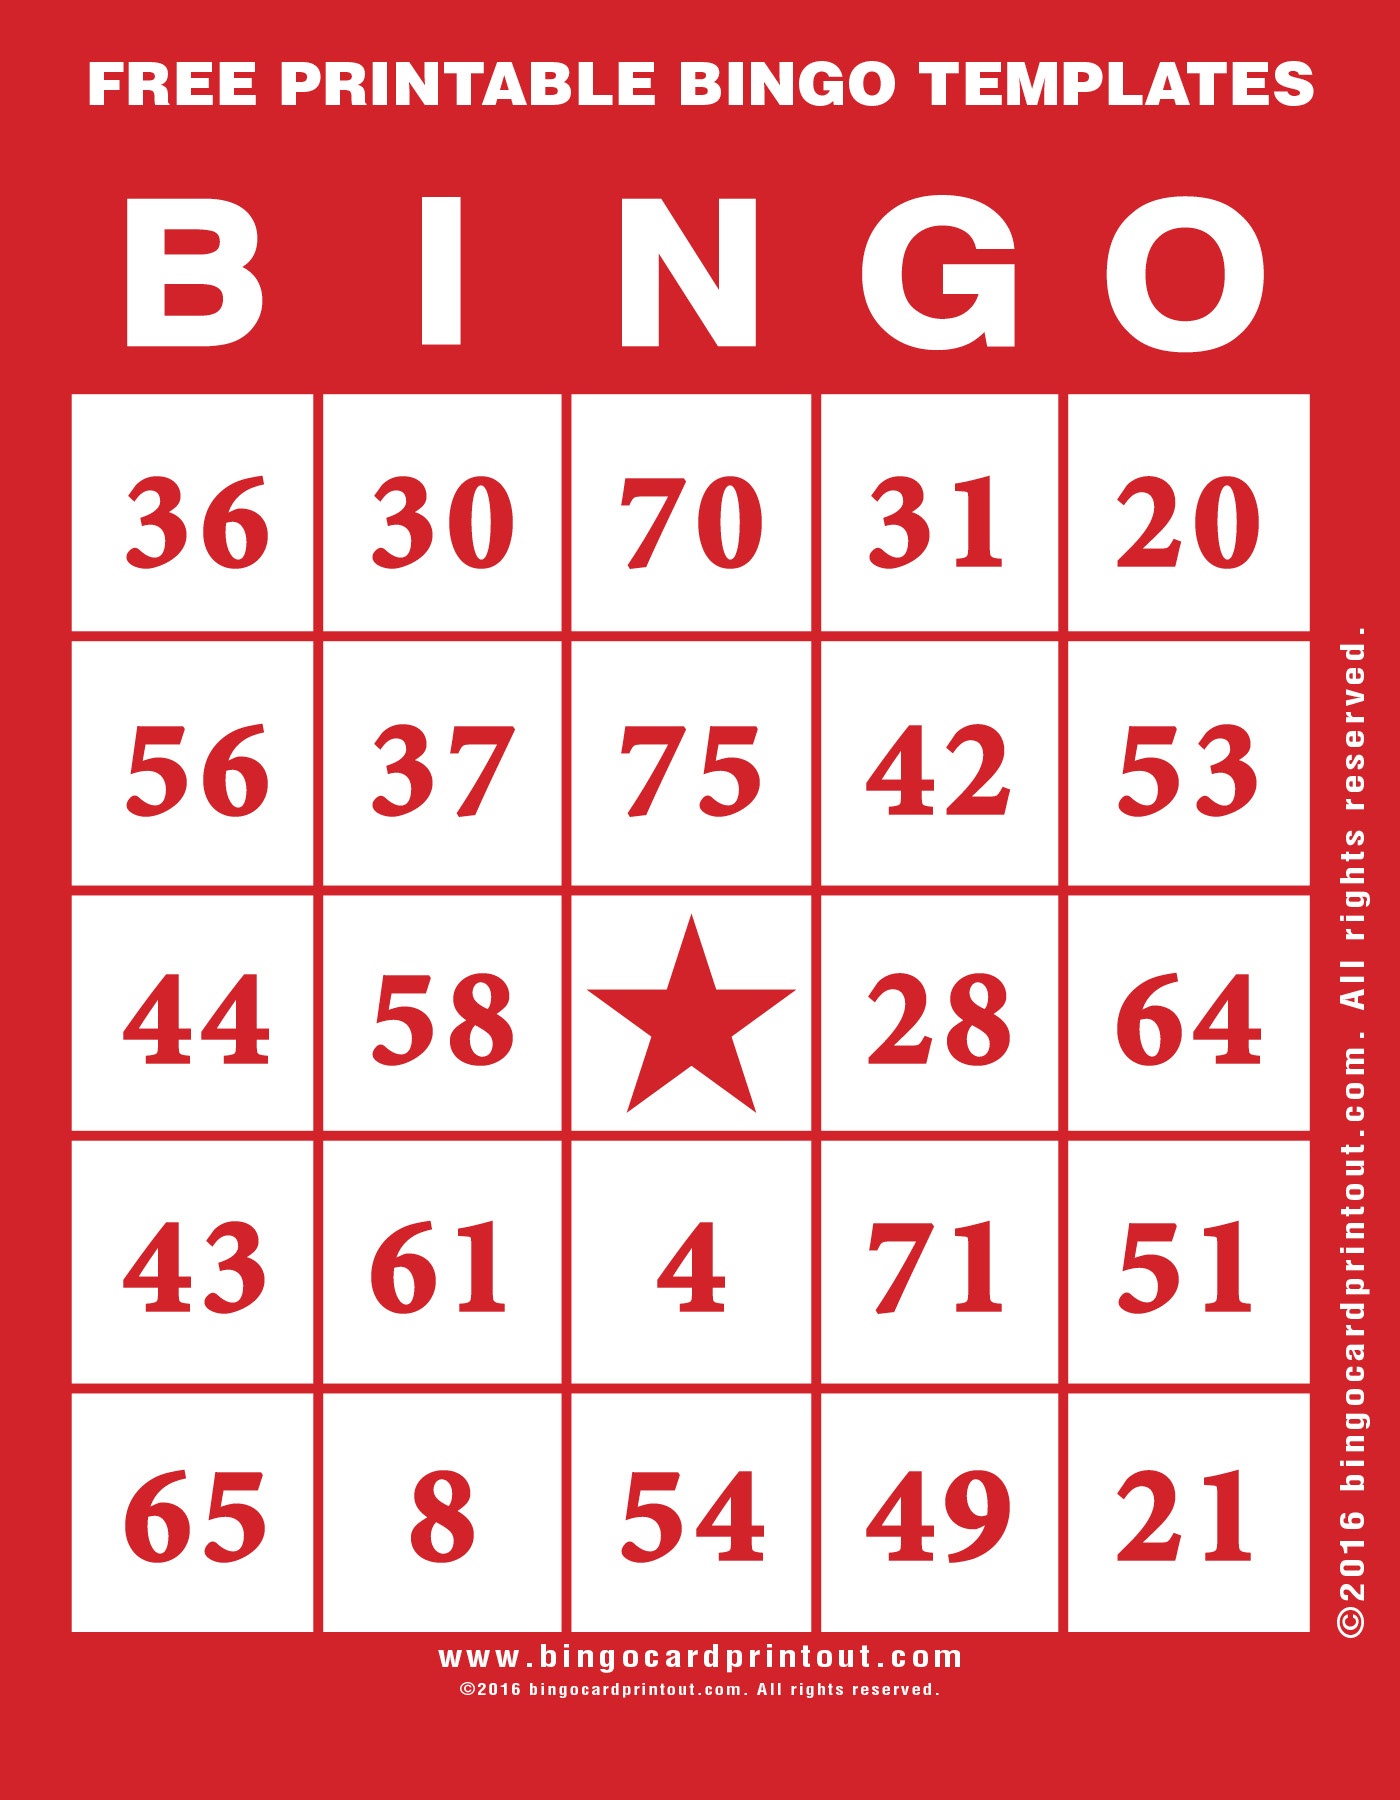 Free Printable Bingo Templates - Bingocardprintout - Free Bingo Patterns Printable